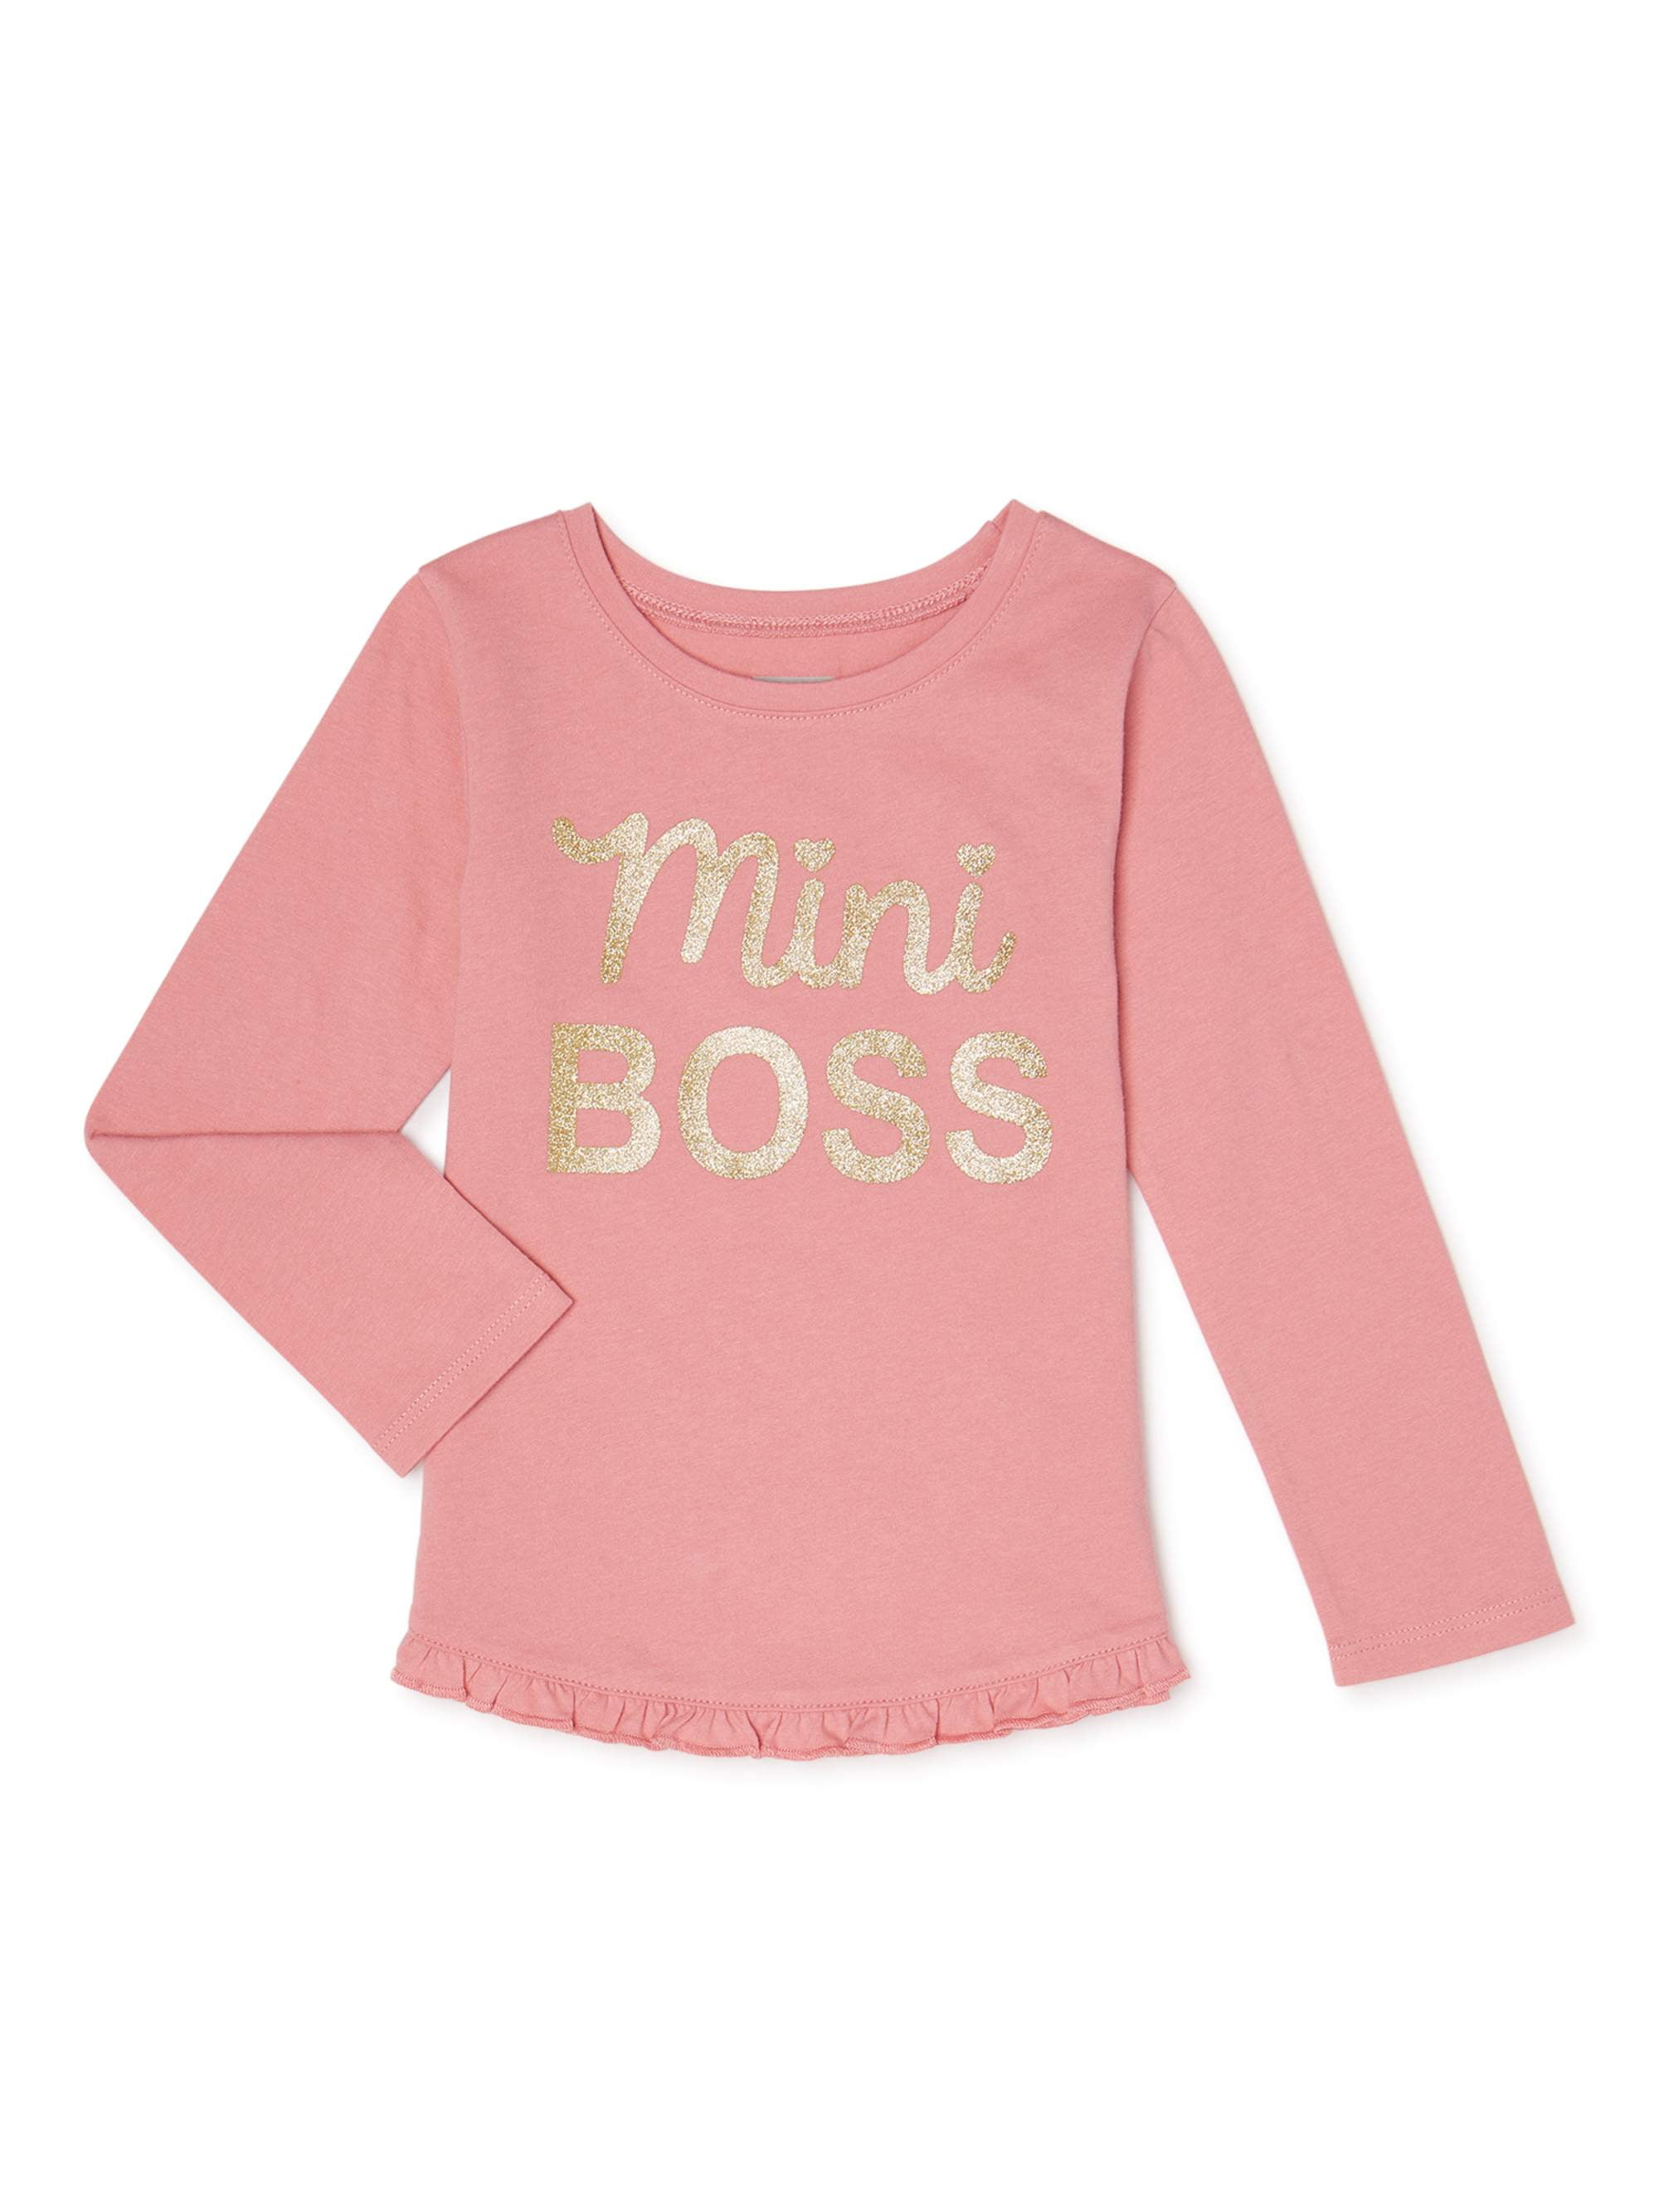 mini boss toddler shirt